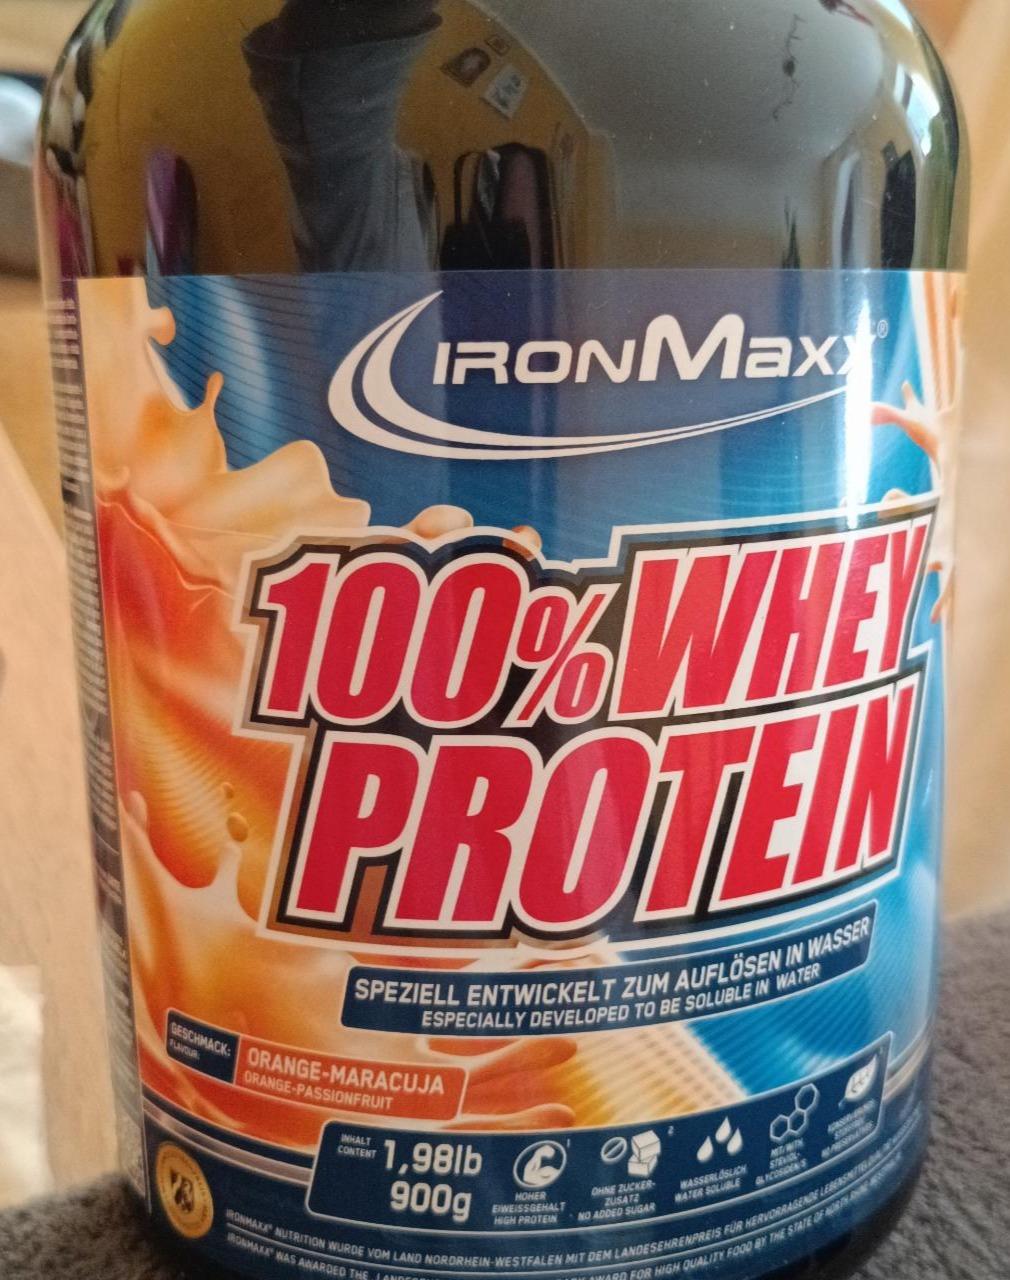 Fotografie - 100% Whey Protein Orange - Maracuja IronMaxx